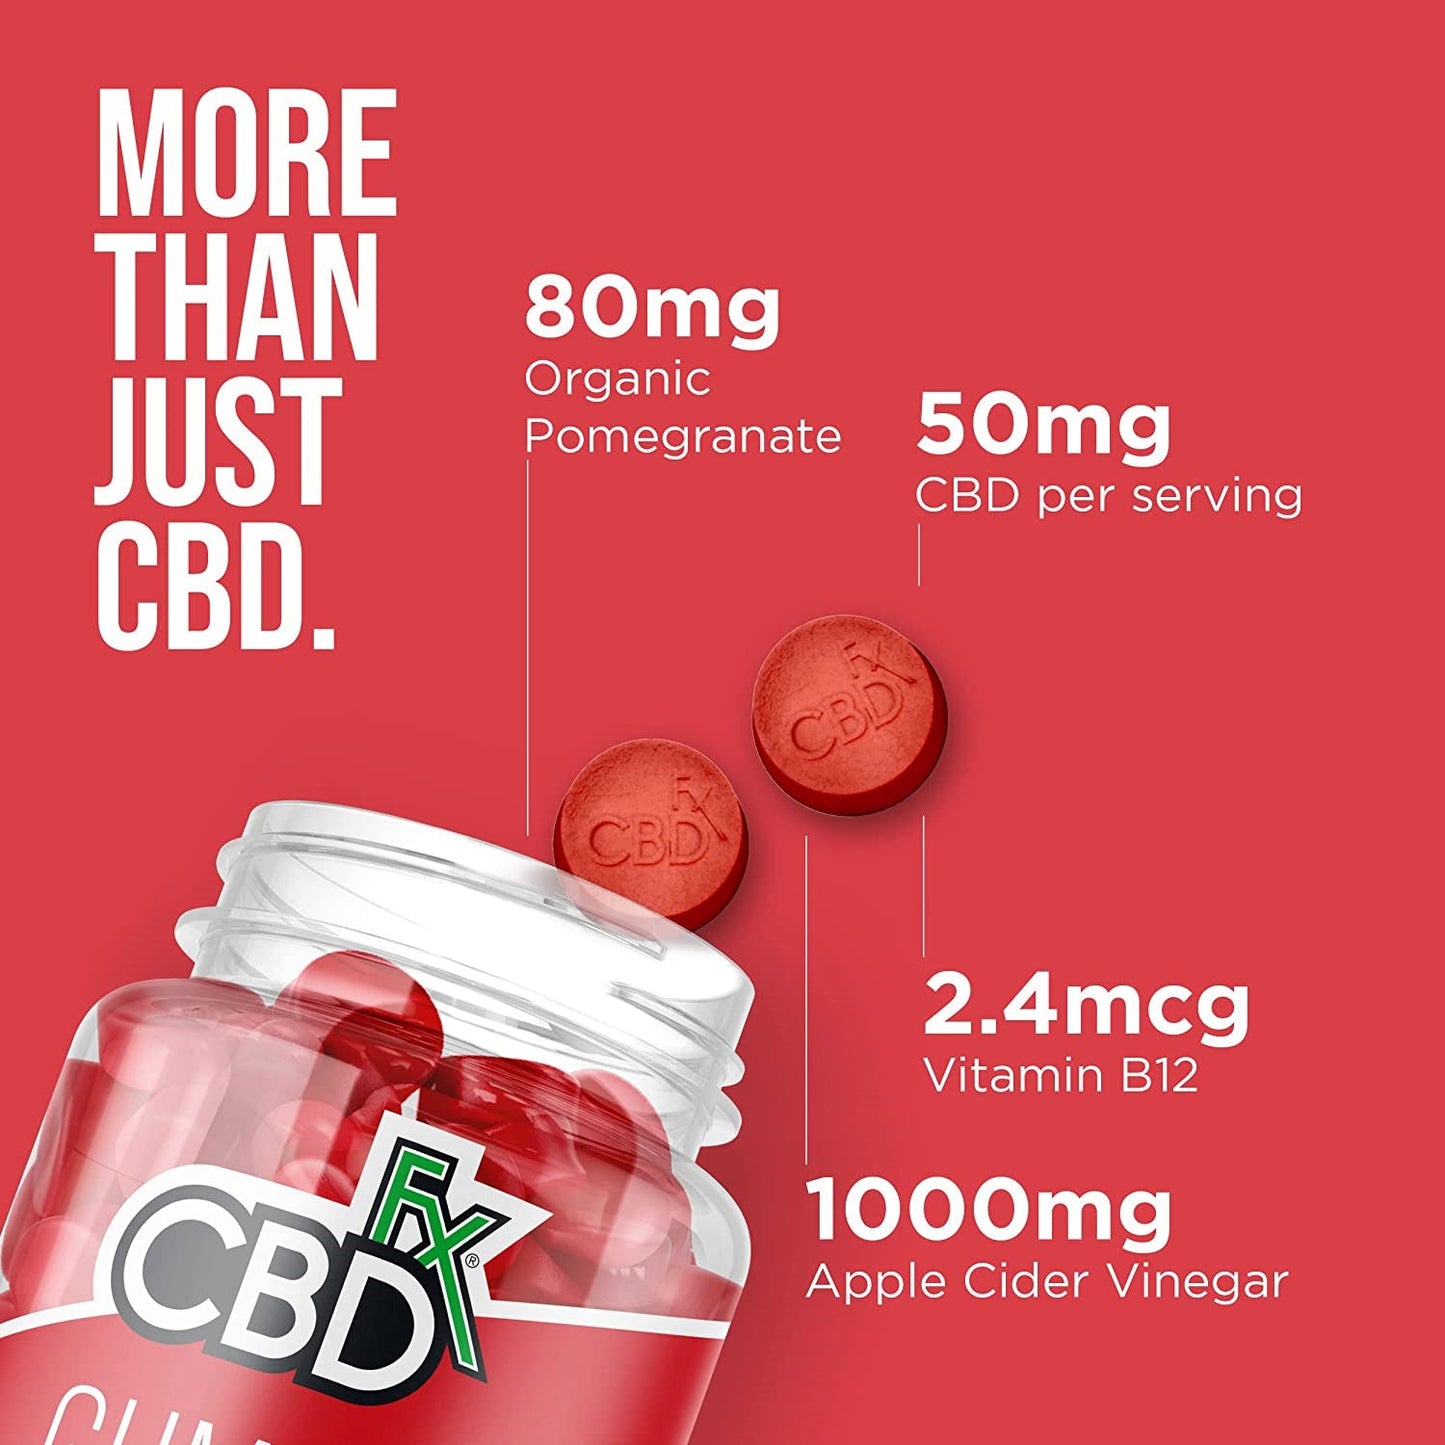 CBDfx CBD Gummies - Broad Spectrum Apple Cider Vinegar Gummies 25MG 1500MG Best Sales Price - Gummies